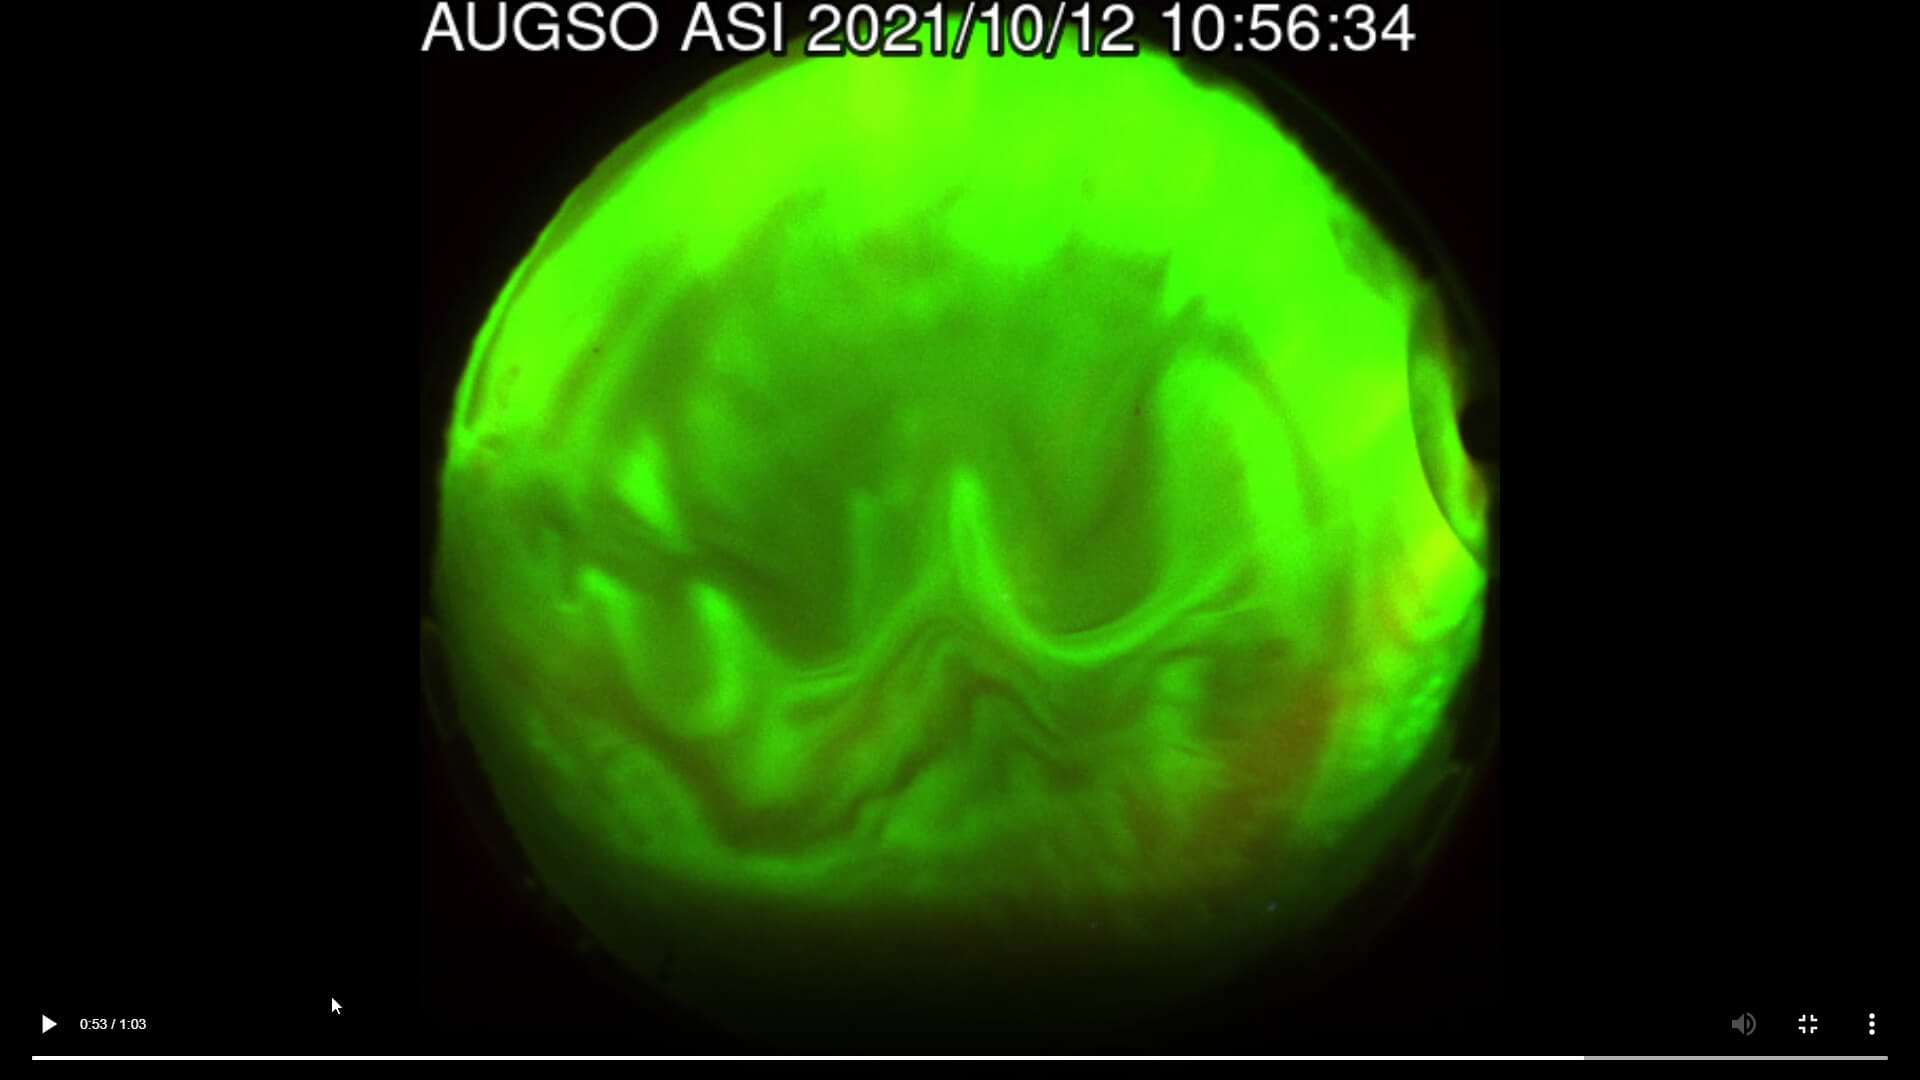 aurora borealis over AU observatory